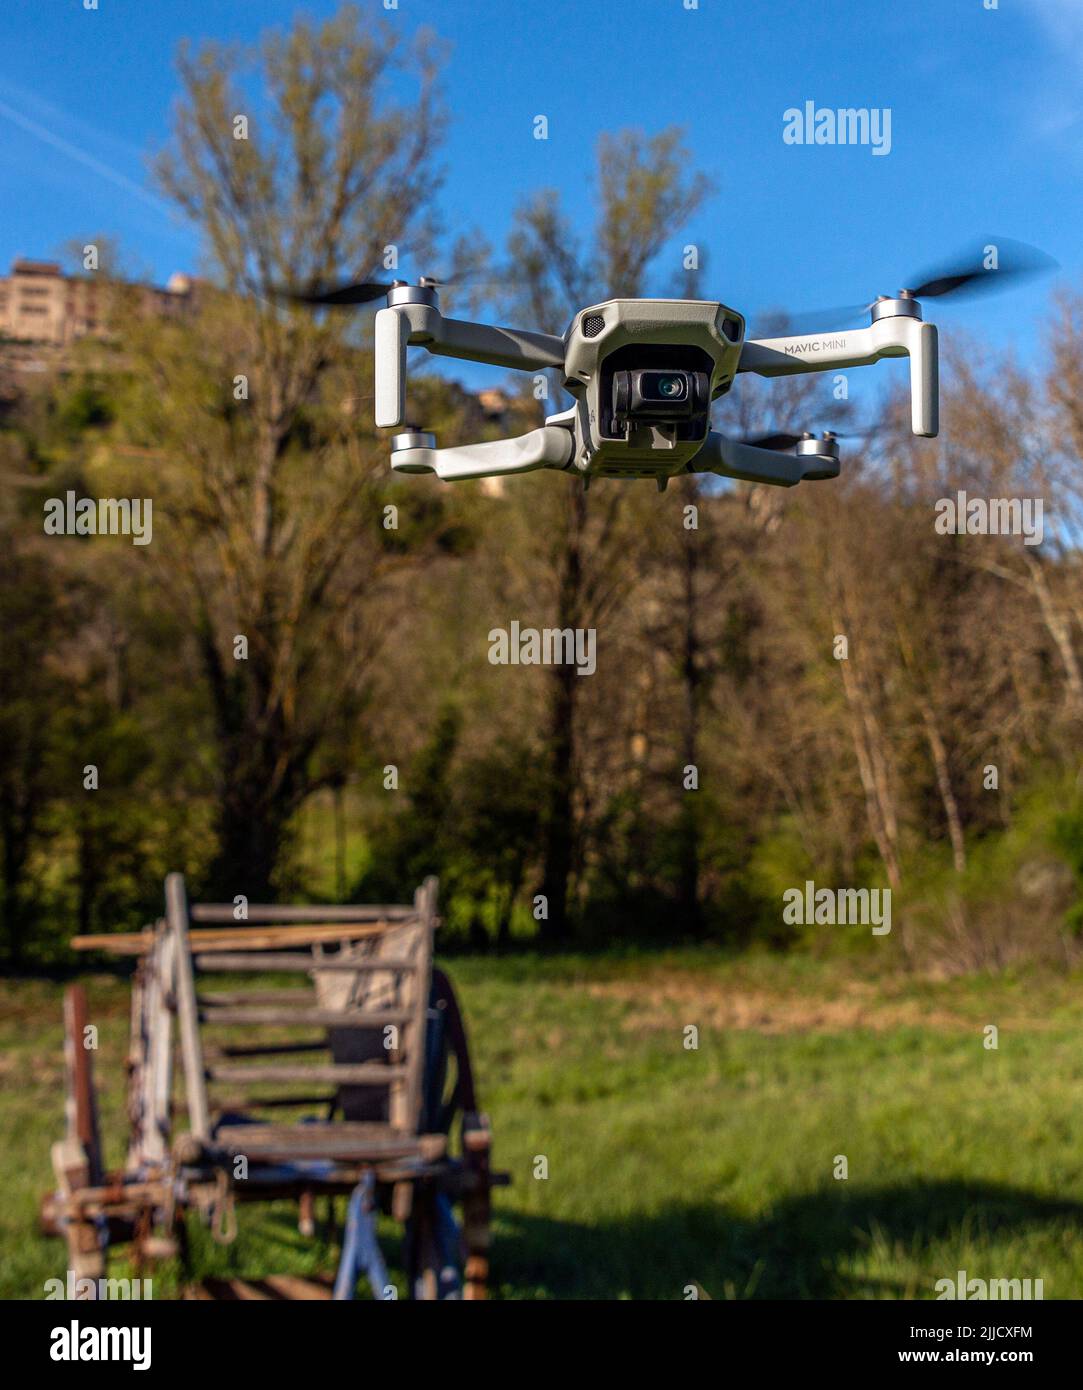 Vue en format portrait d'un mini-drone DJI Mavic survolant le sol. Banque D'Images